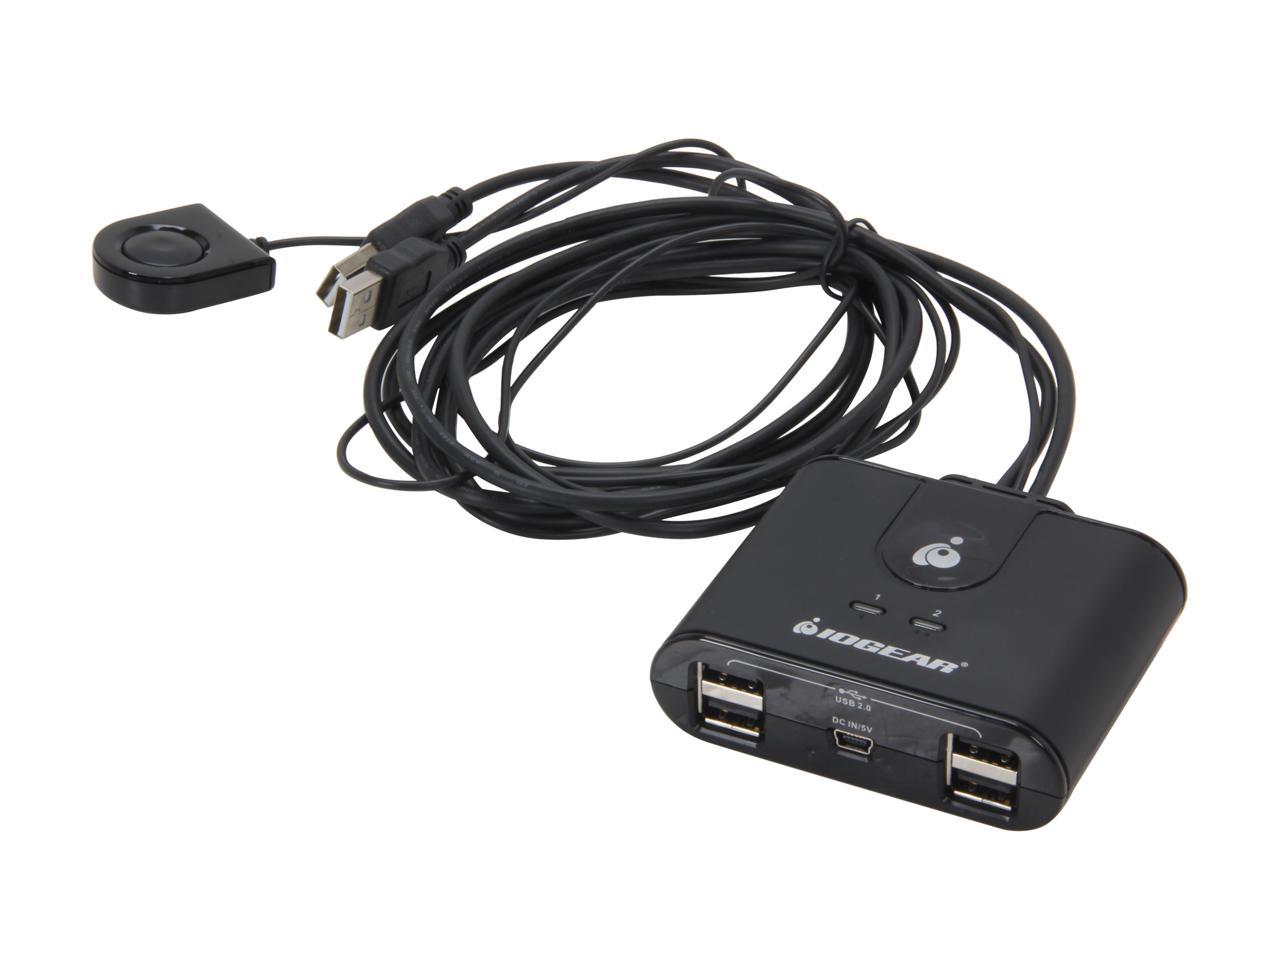 IOGEAR GUS402 2 x 4 USB 2.0 Peripheral Sharing Switch